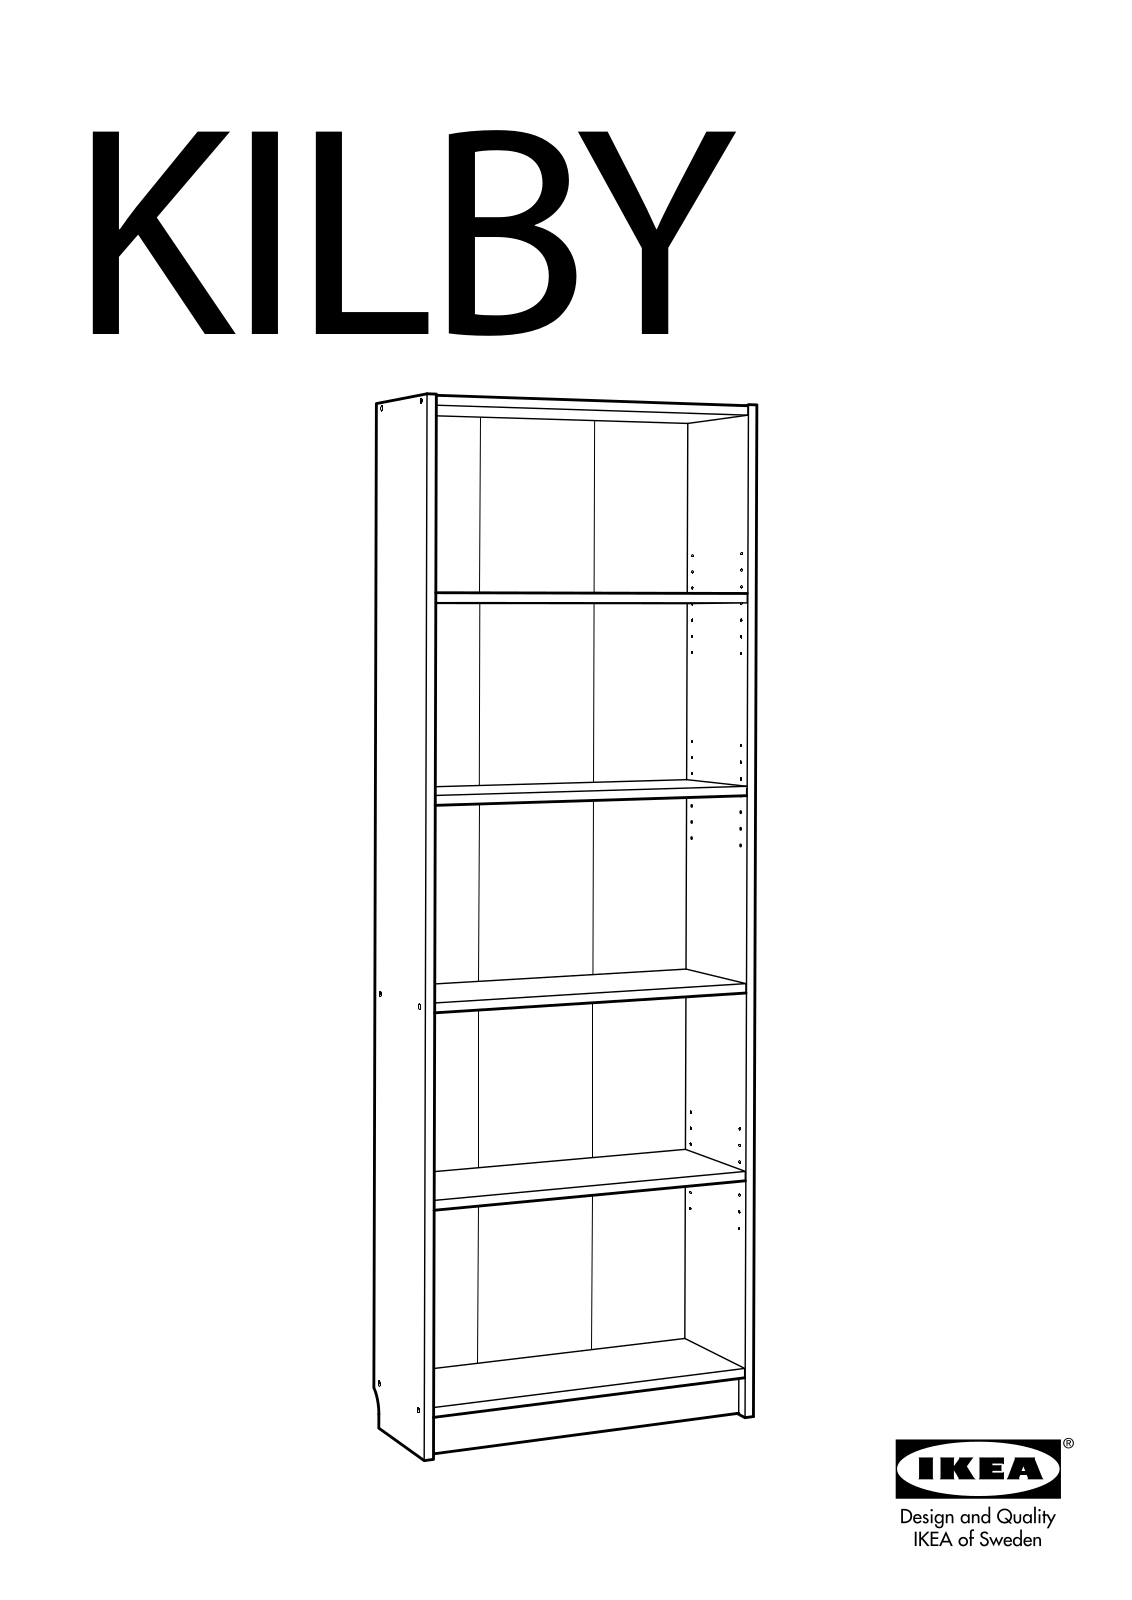 IKEA KILBY User Manual